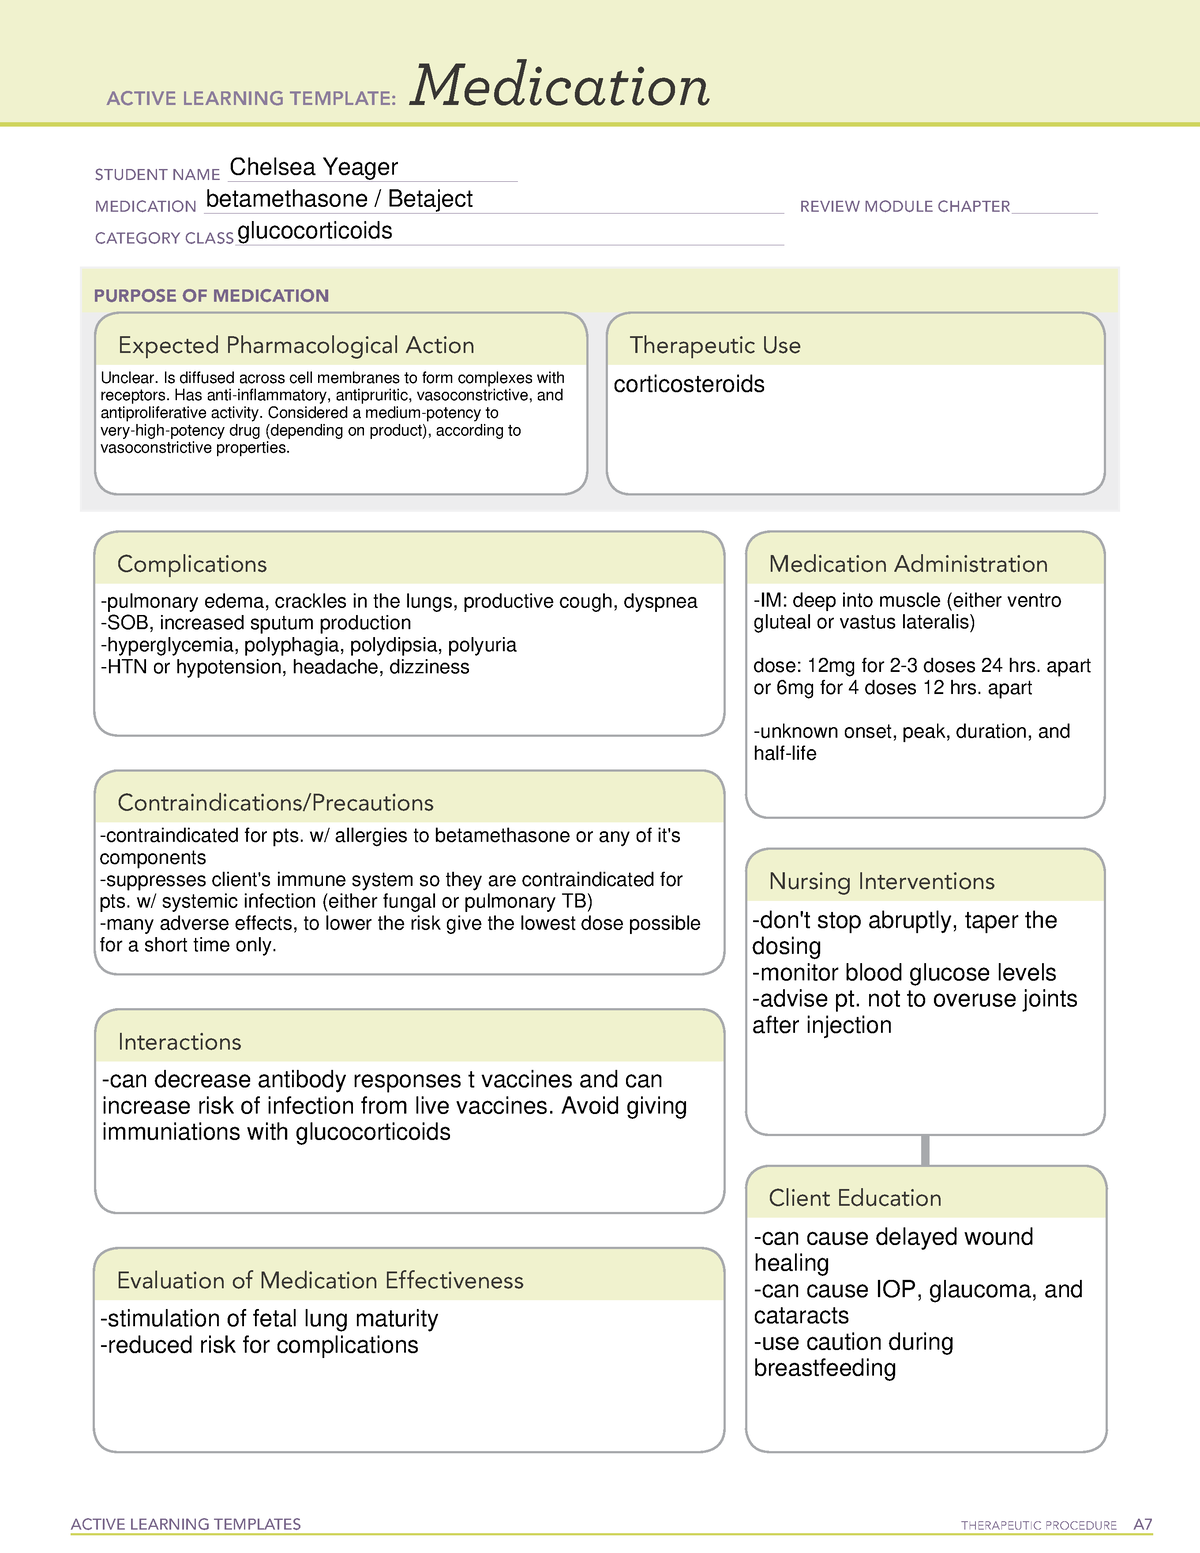 betamethasone-med-sheet-copy-active-learning-templates